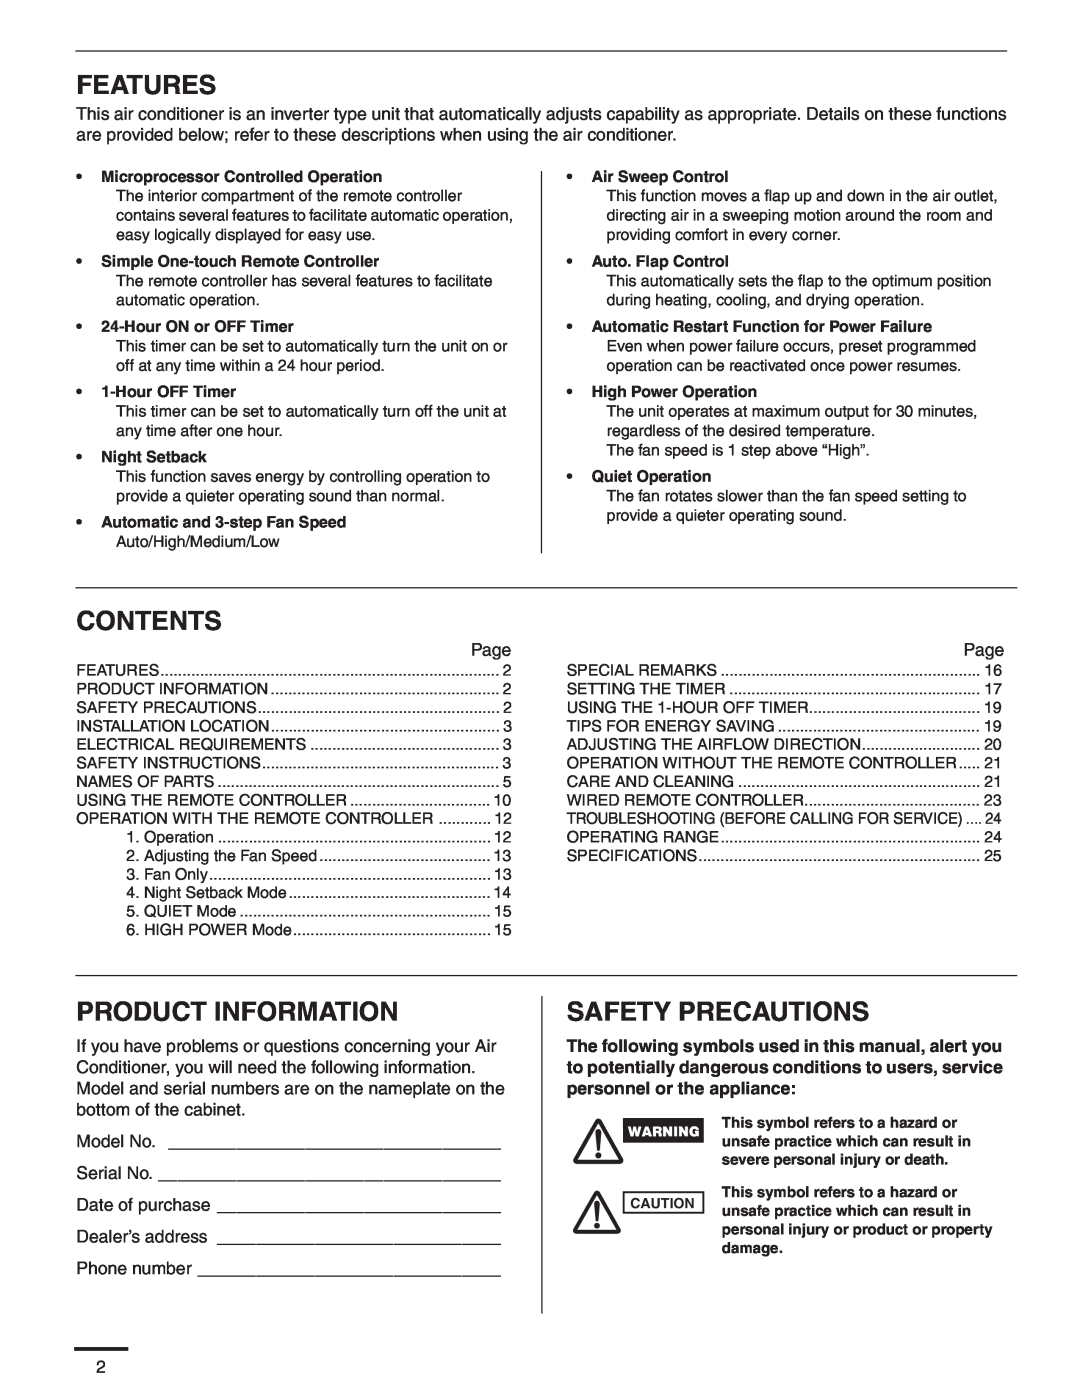 Panasonic CU-KS24NKUA, CS-KS24NKU service manual Features, Contents, Product Information, Safety Precautions 